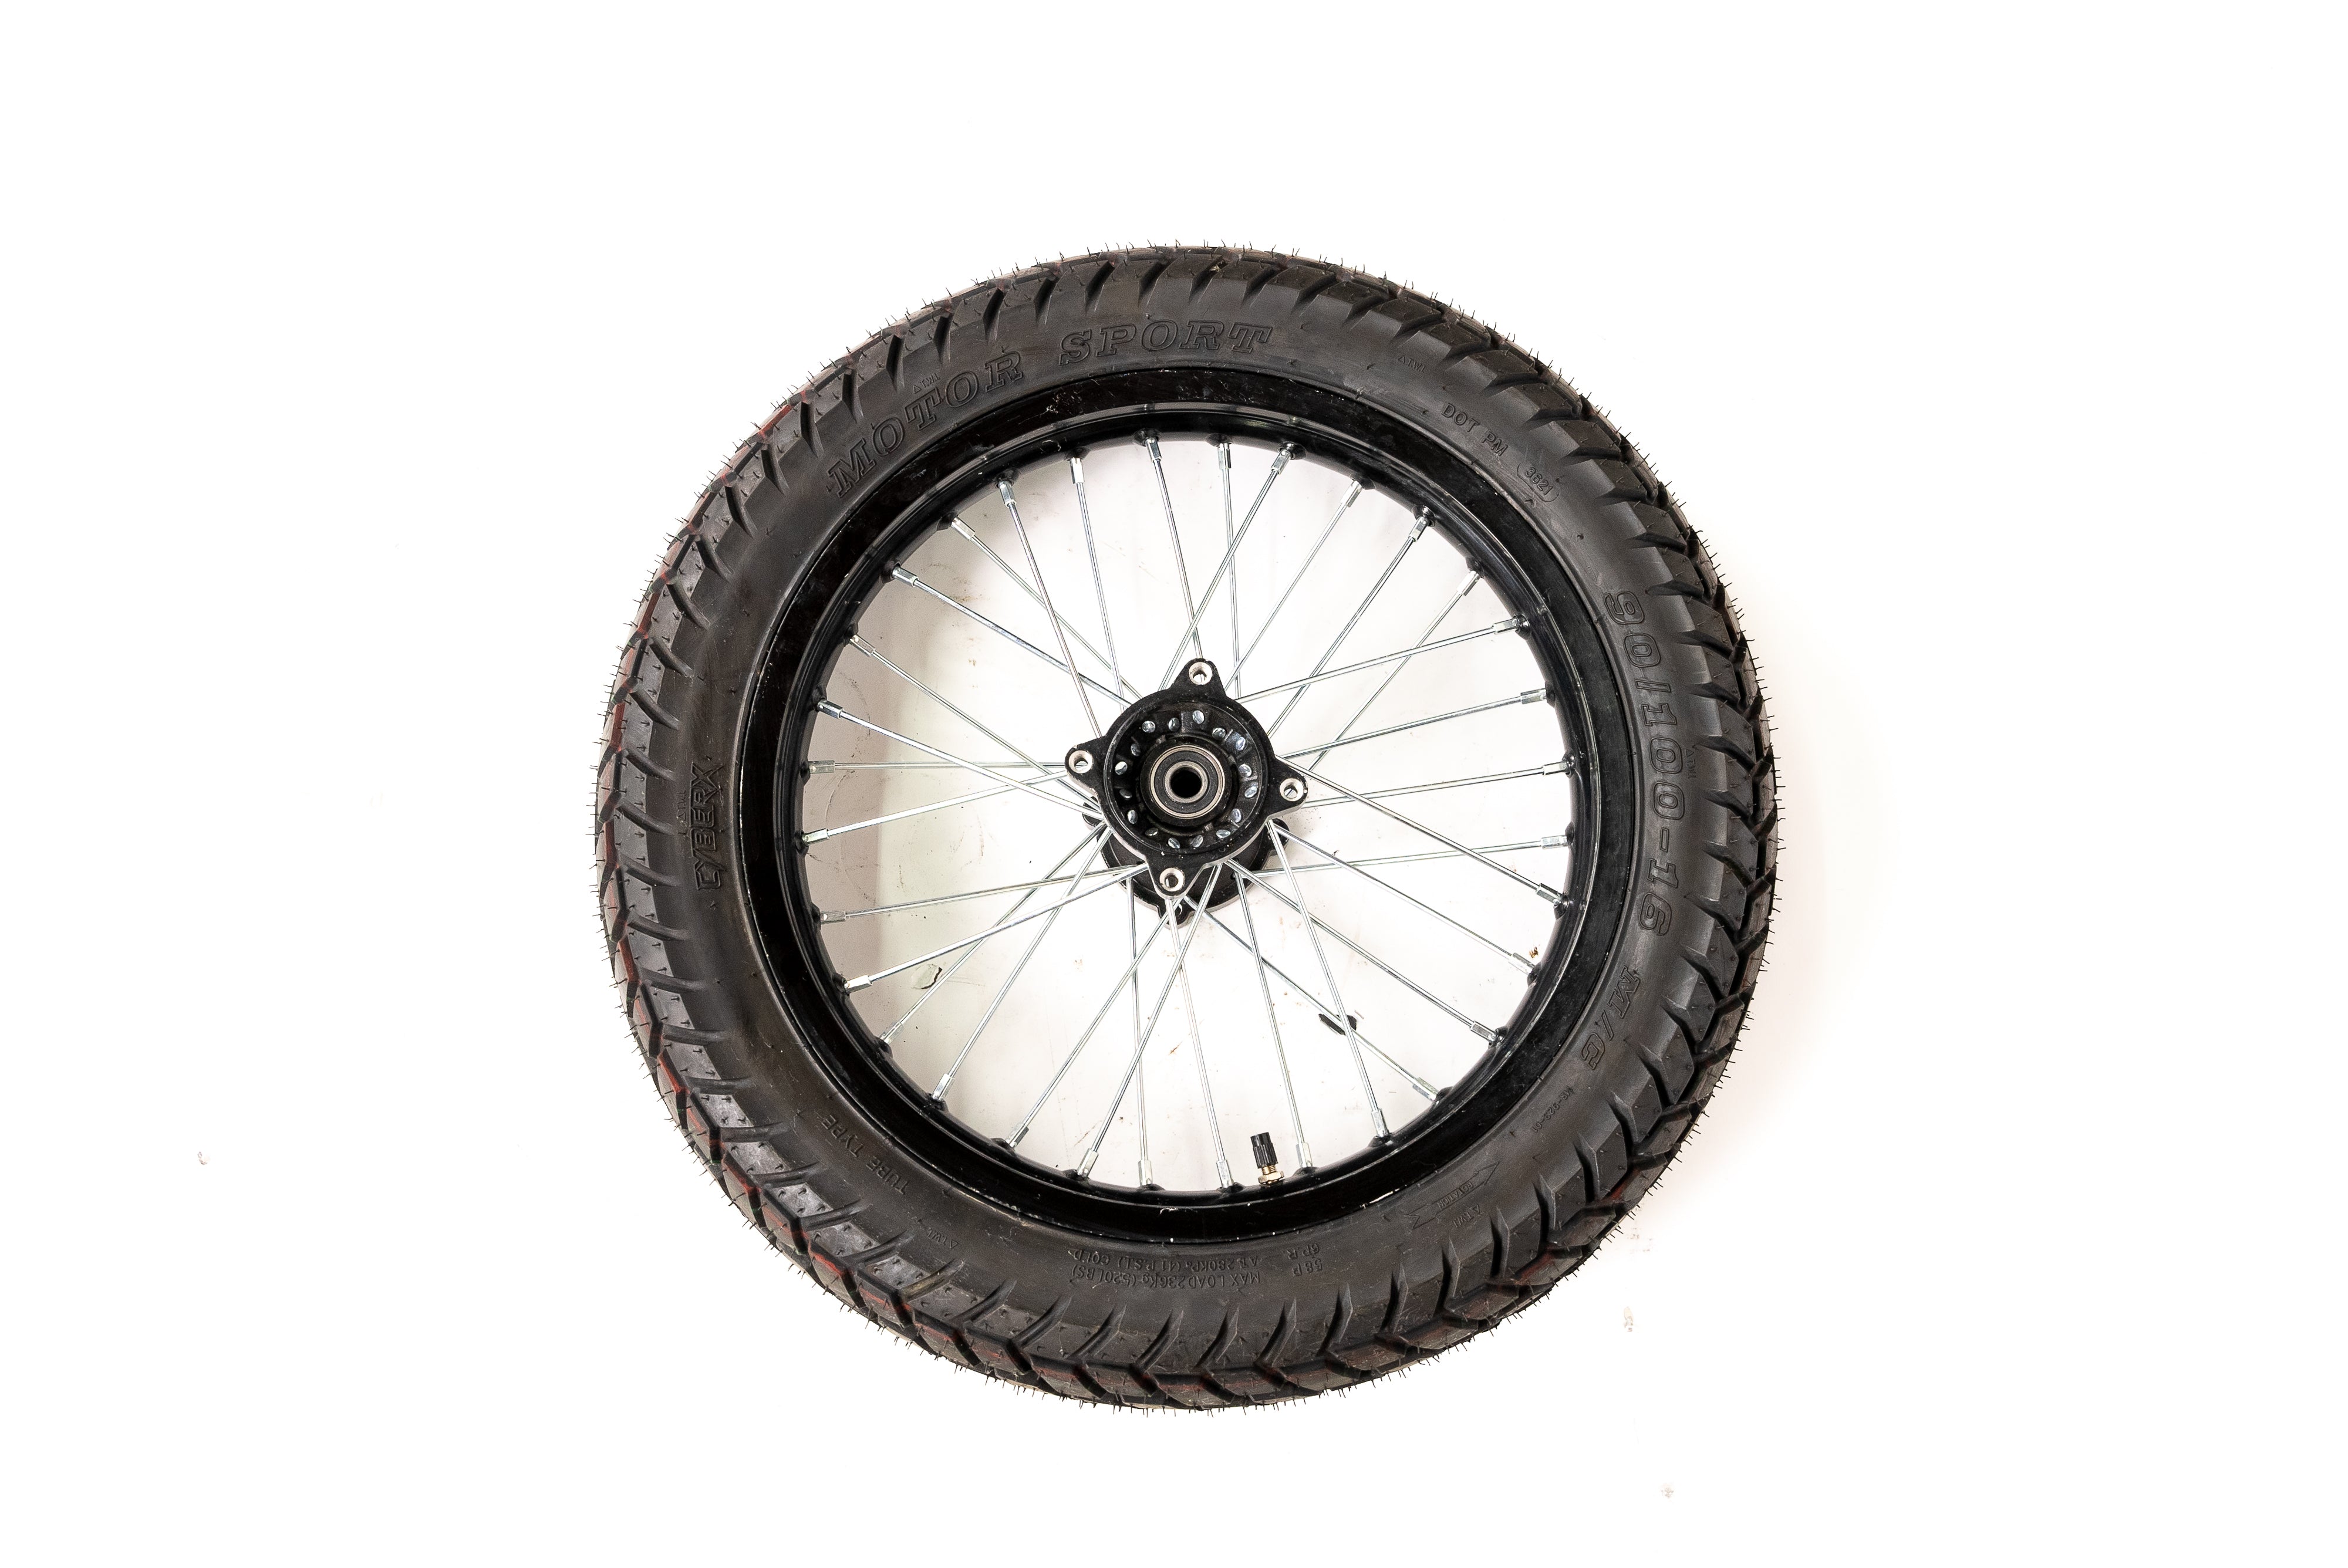 Xion Bike 16 inch rear wheel Hybrid tire.